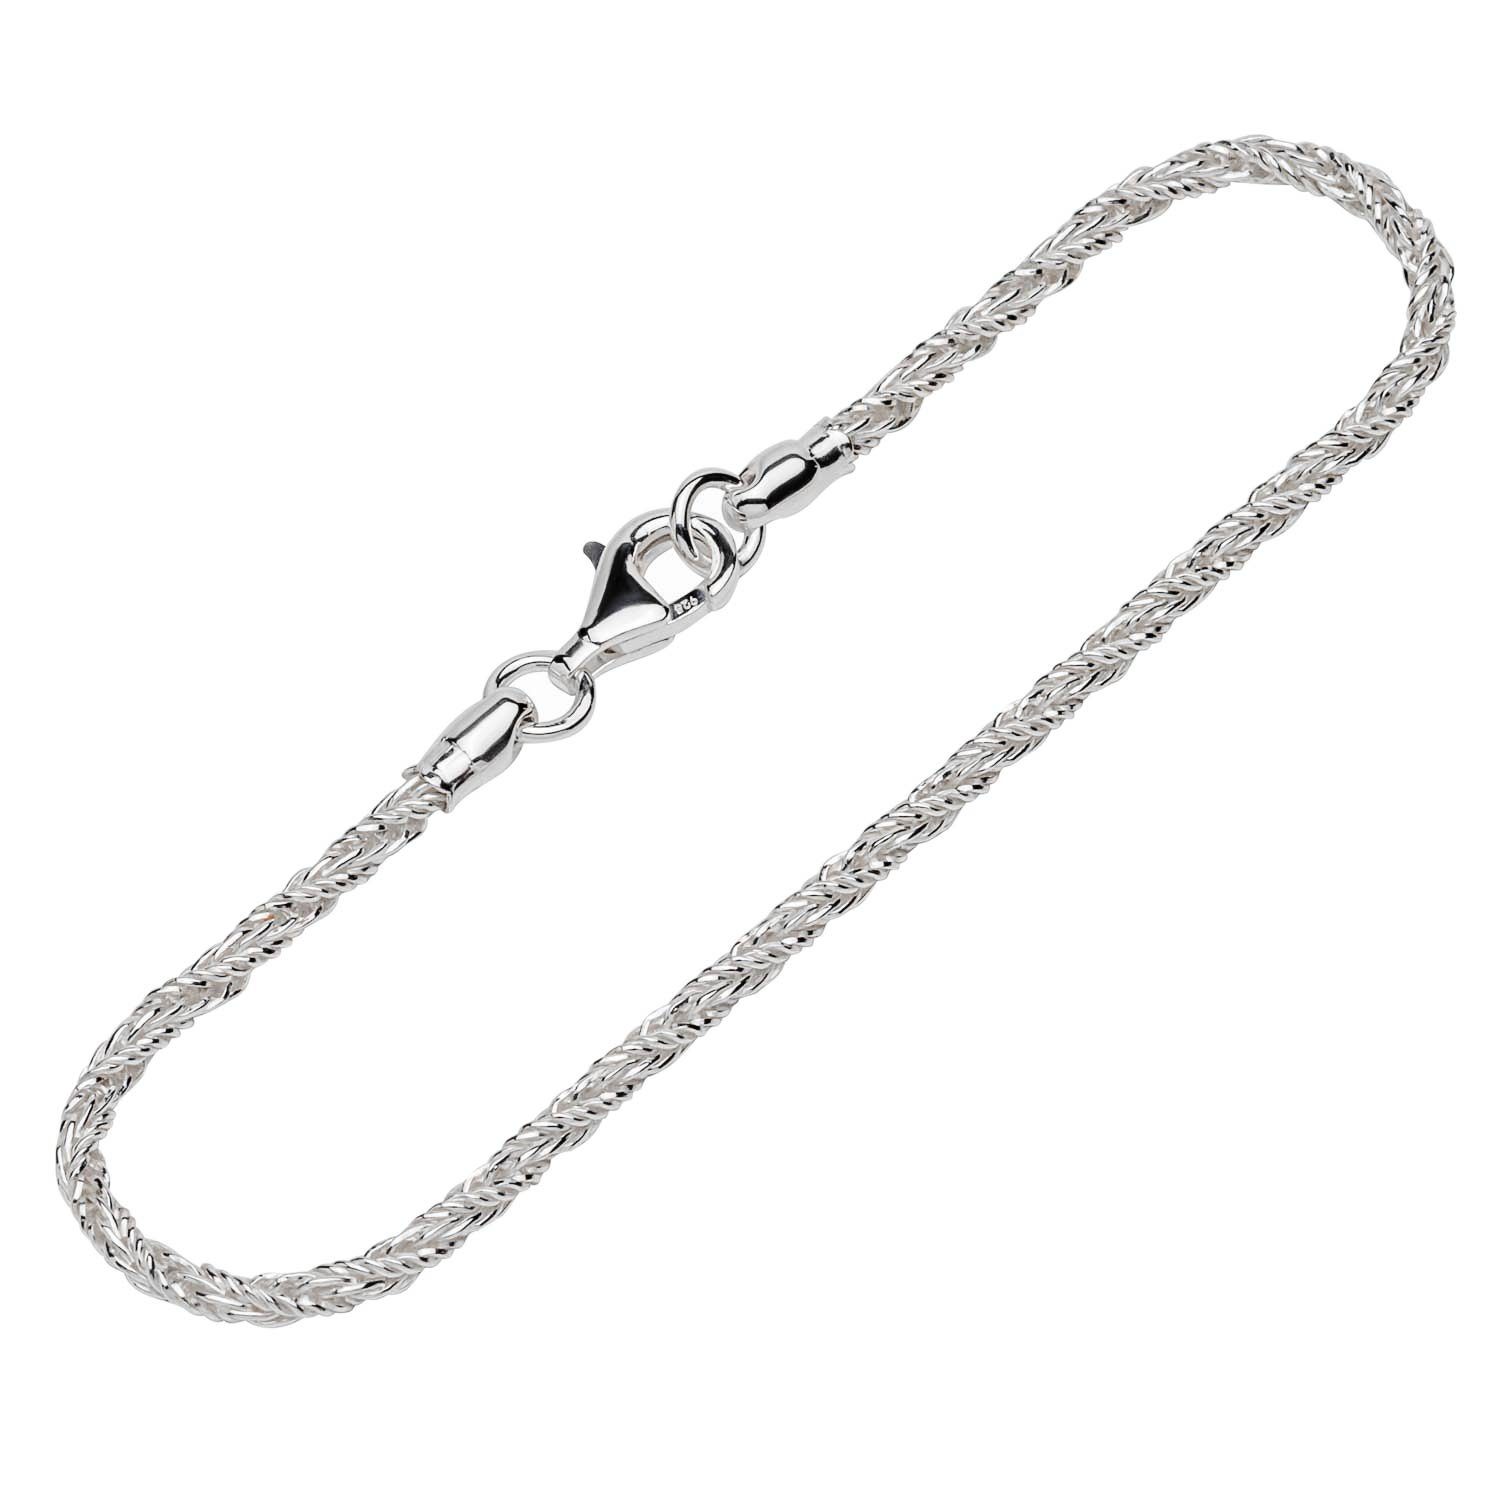 NKlaus Silberarmband Armband 925 Sterling Silber Fuchsschwanzkette 19cm